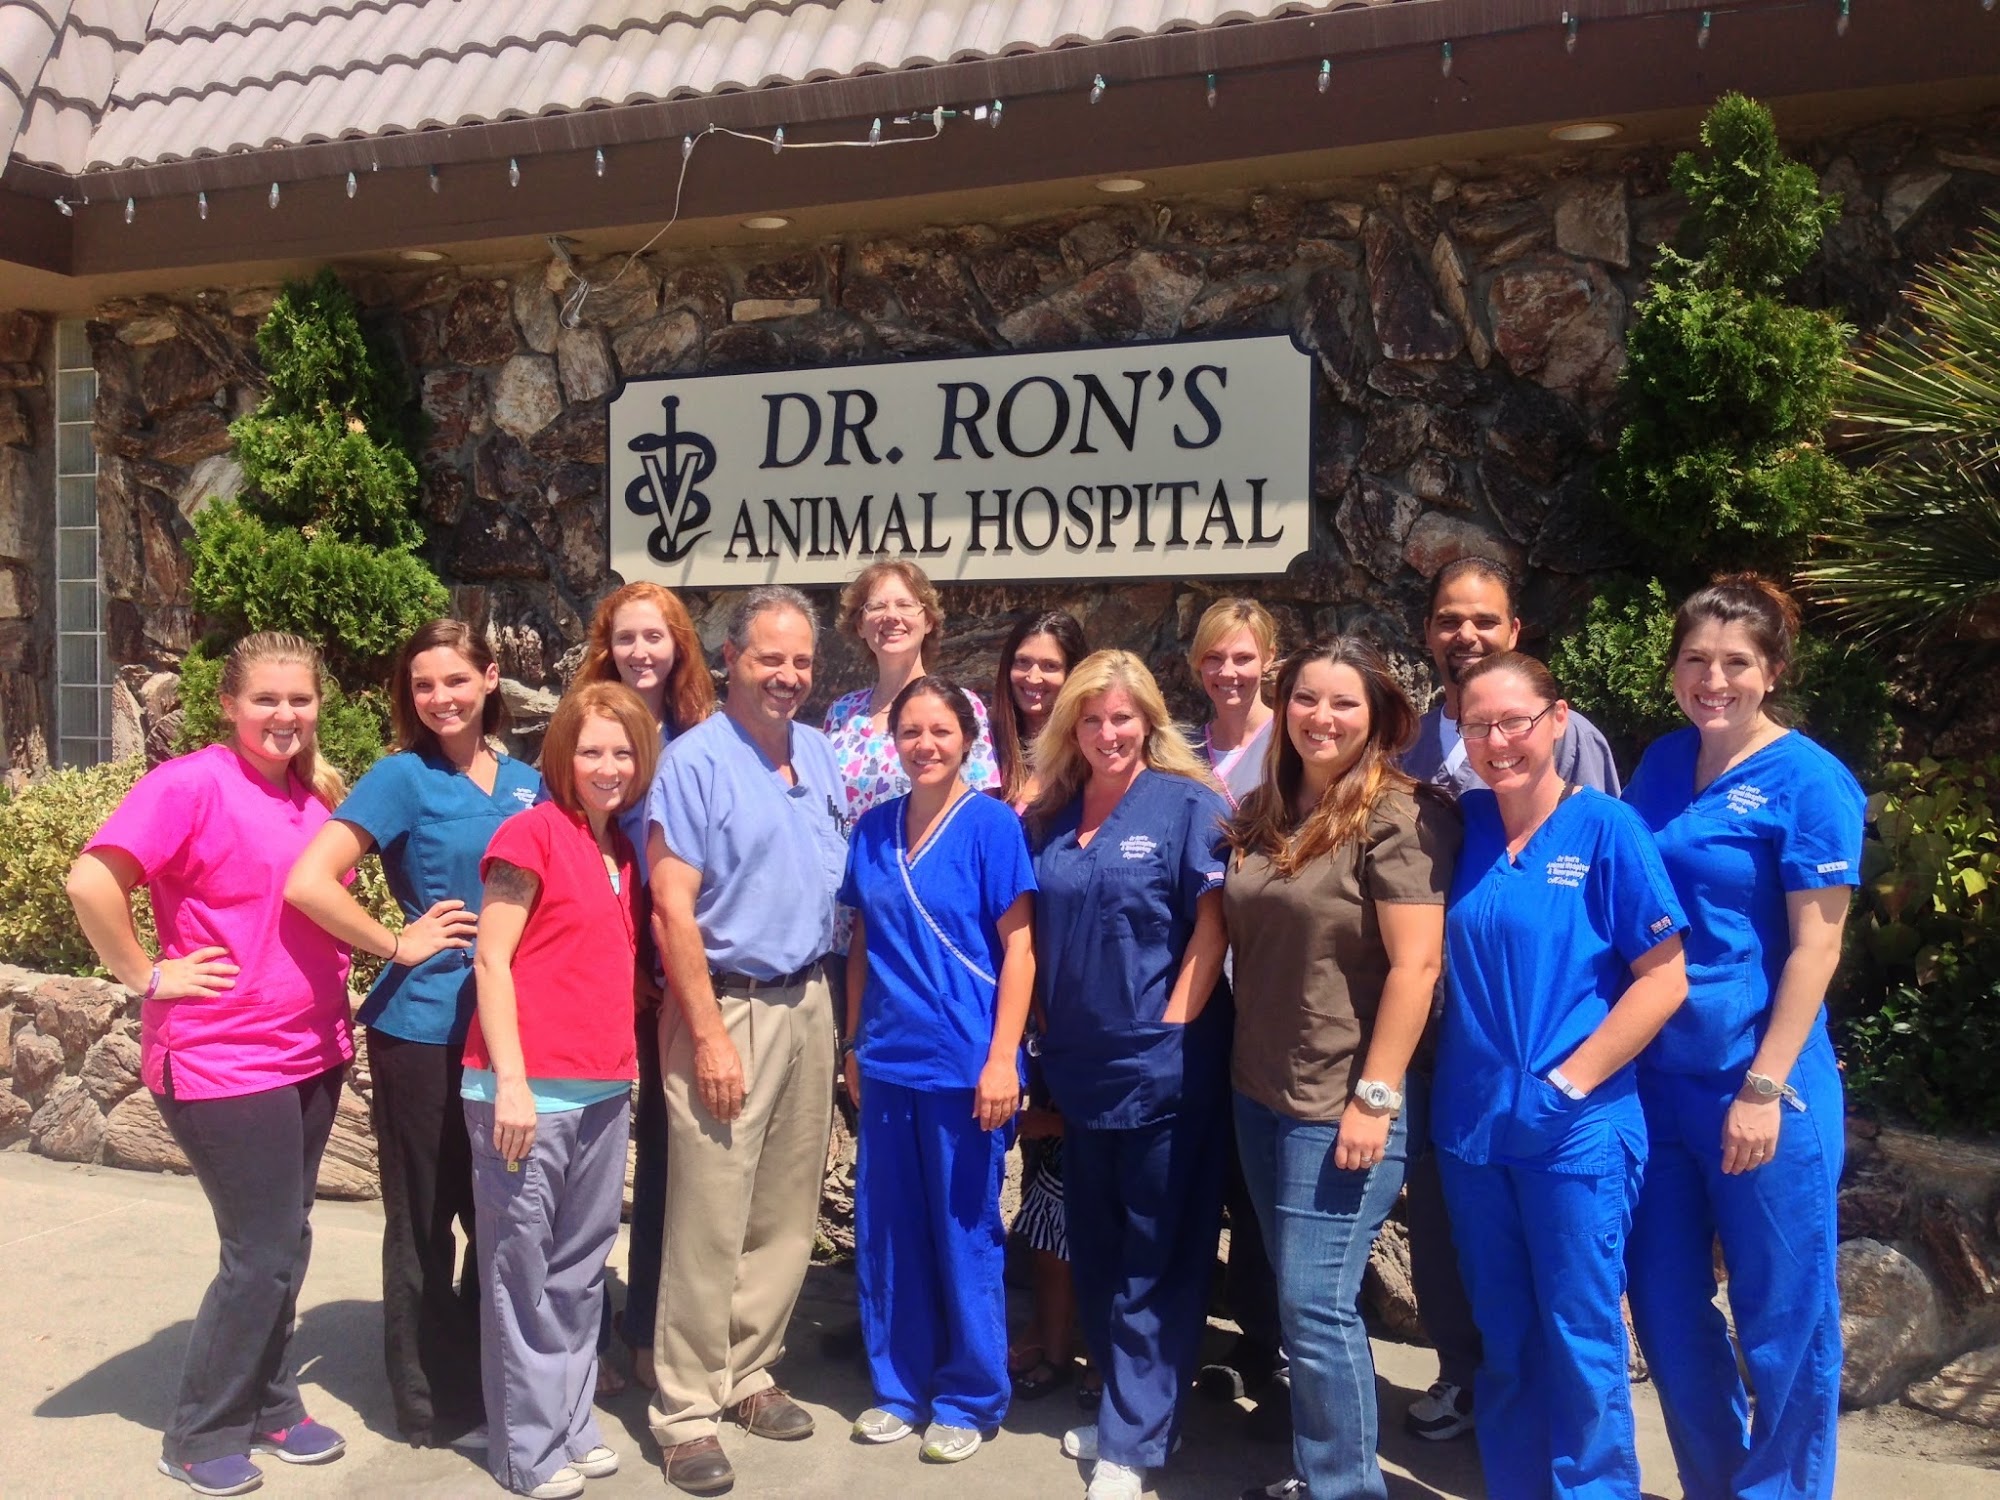 Dr. Ron's Animal Hospital & Emergency Veterinarian